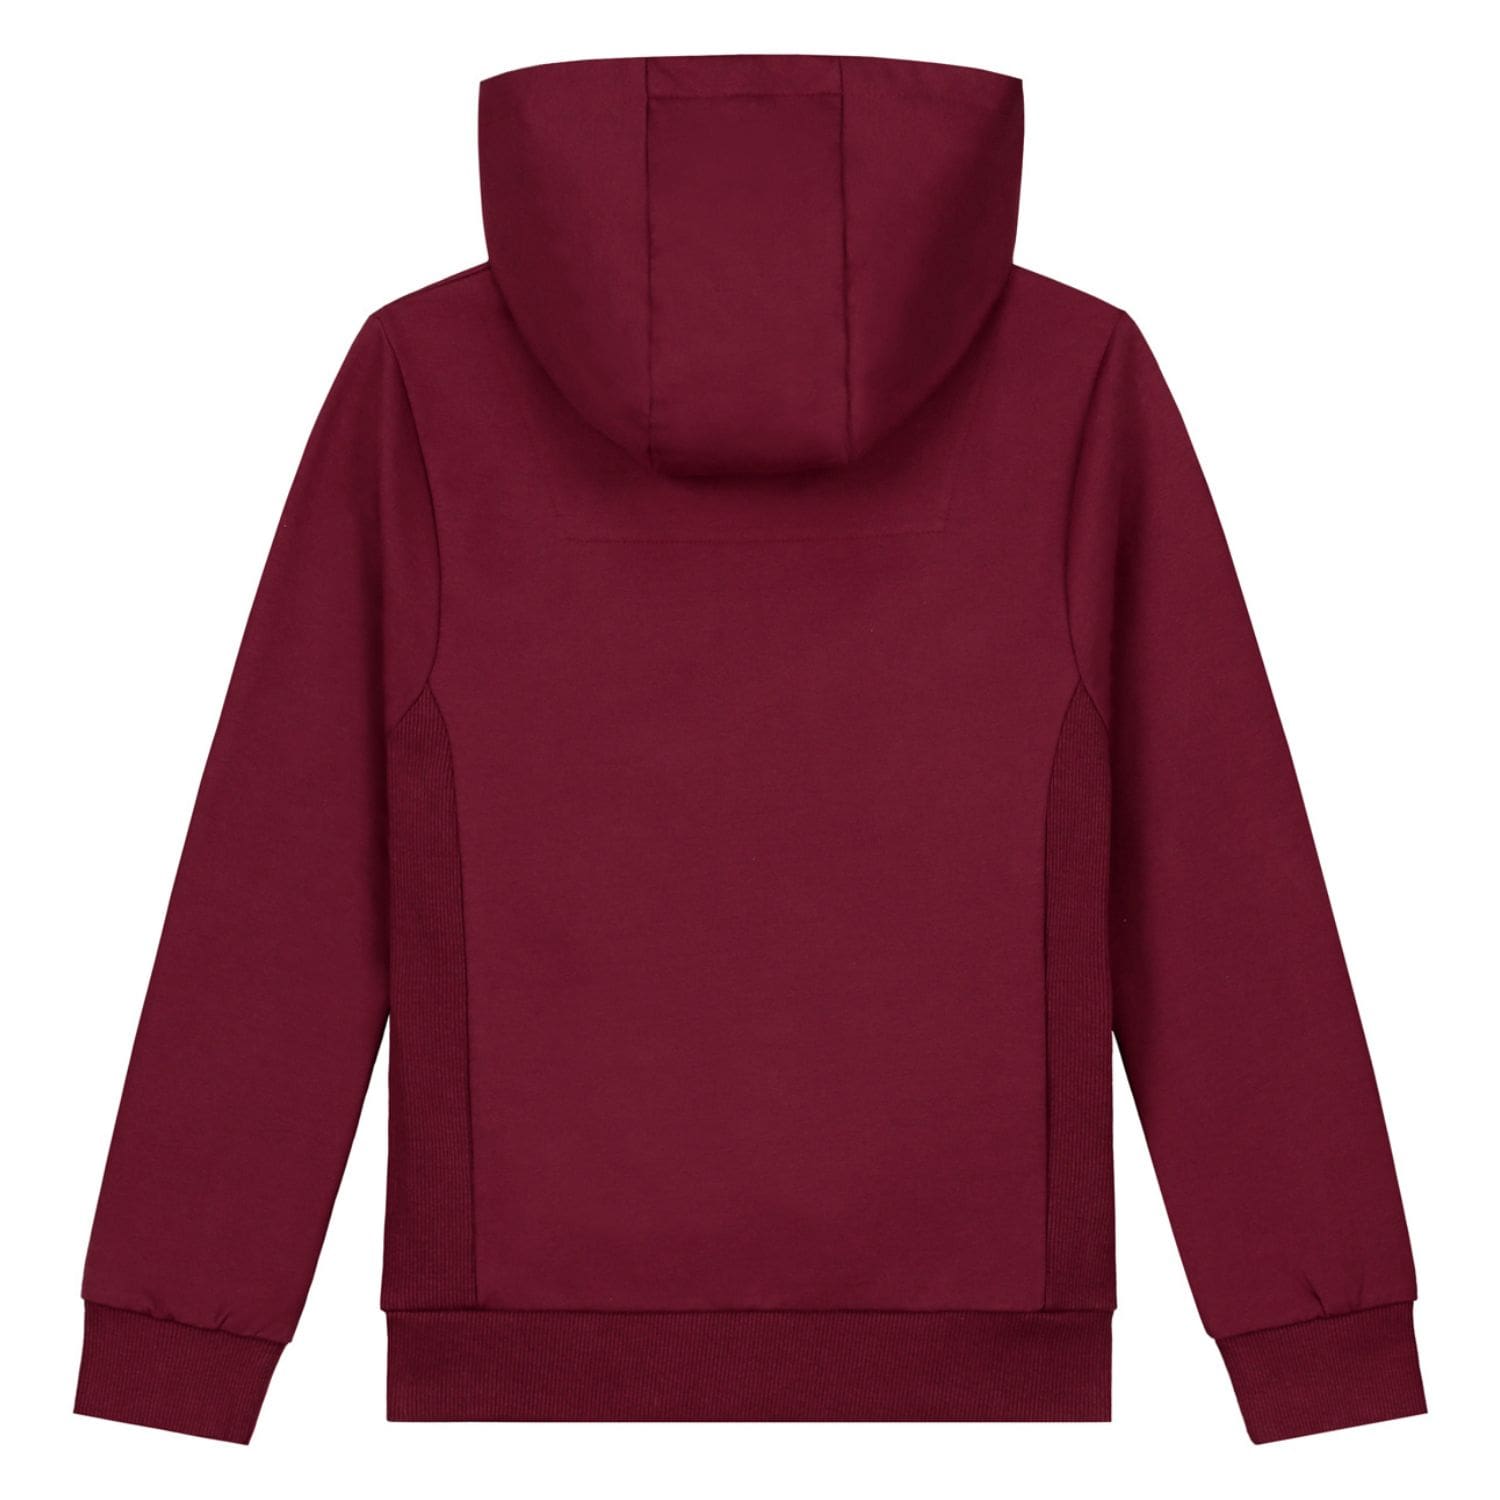 SKURK Jongens Hoodie Sweater Bordeaux Rood